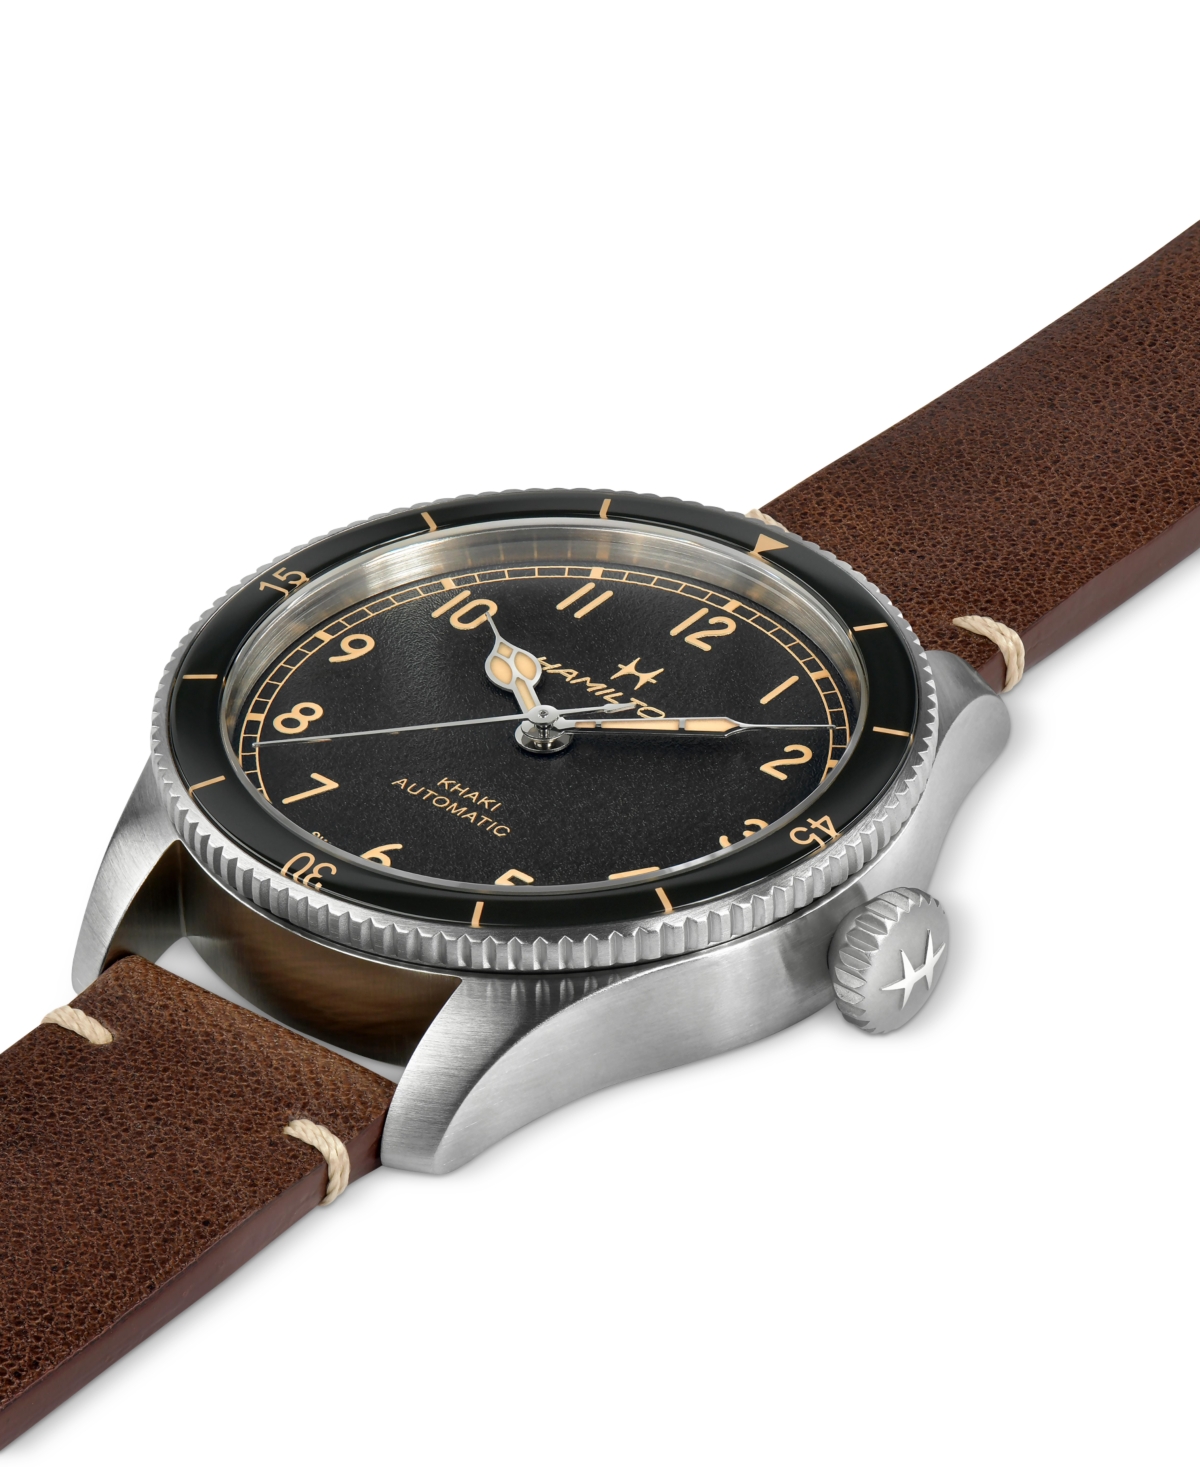 Shop Hamilton Men's Khaki Aviation Pioneer Automatic Brown Leather Strap Watch 38mm